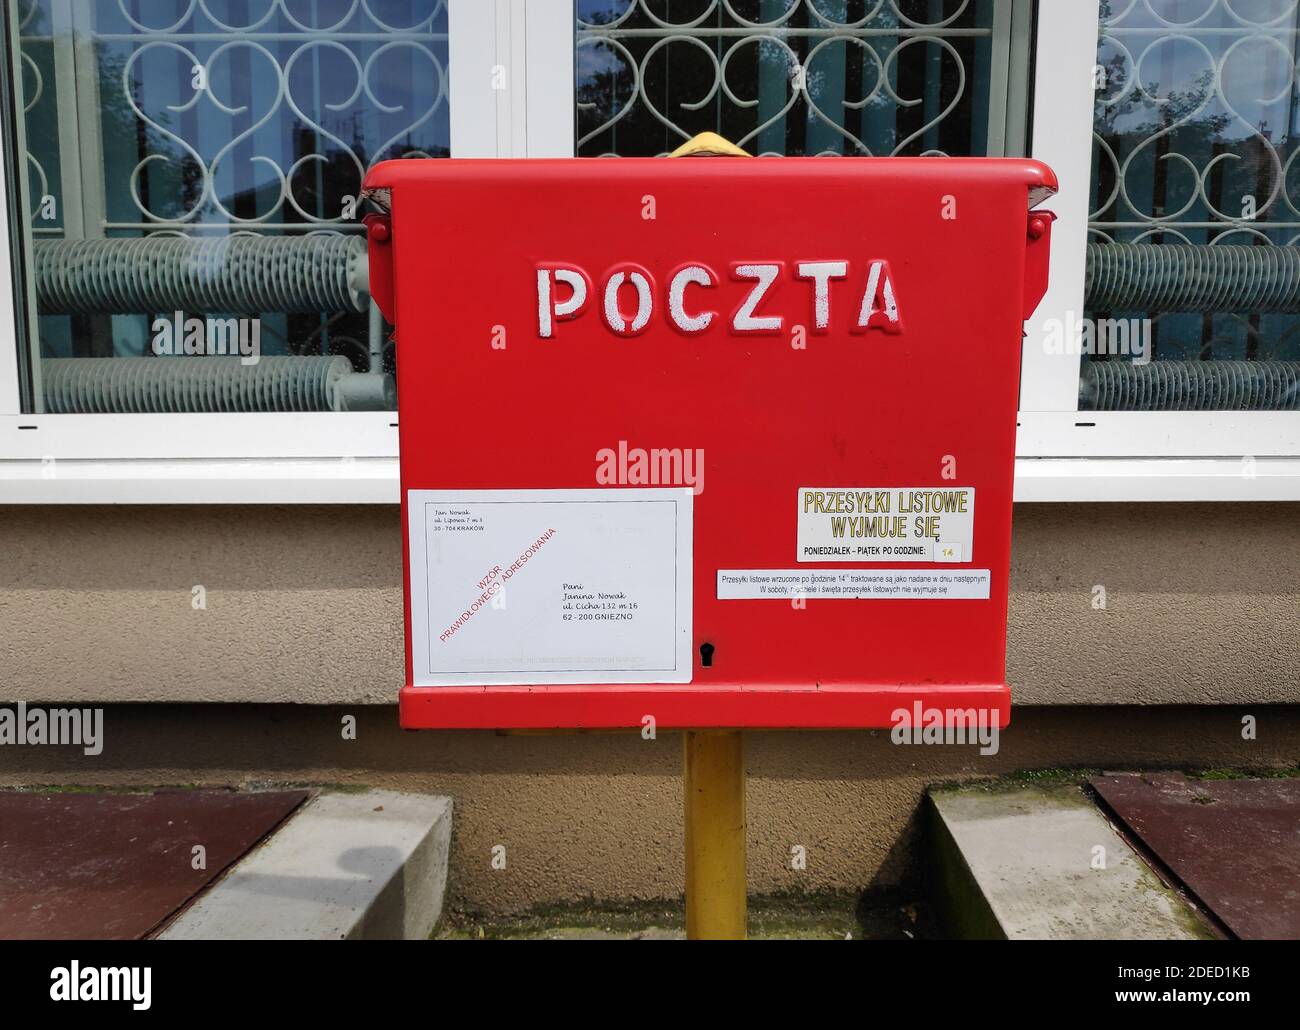 BYTOM, POLAND - JUNE 26, 2020: Public mail box in Bytom, Poland. Poczta Polska is the national post service operator in Poland. Stock Photo